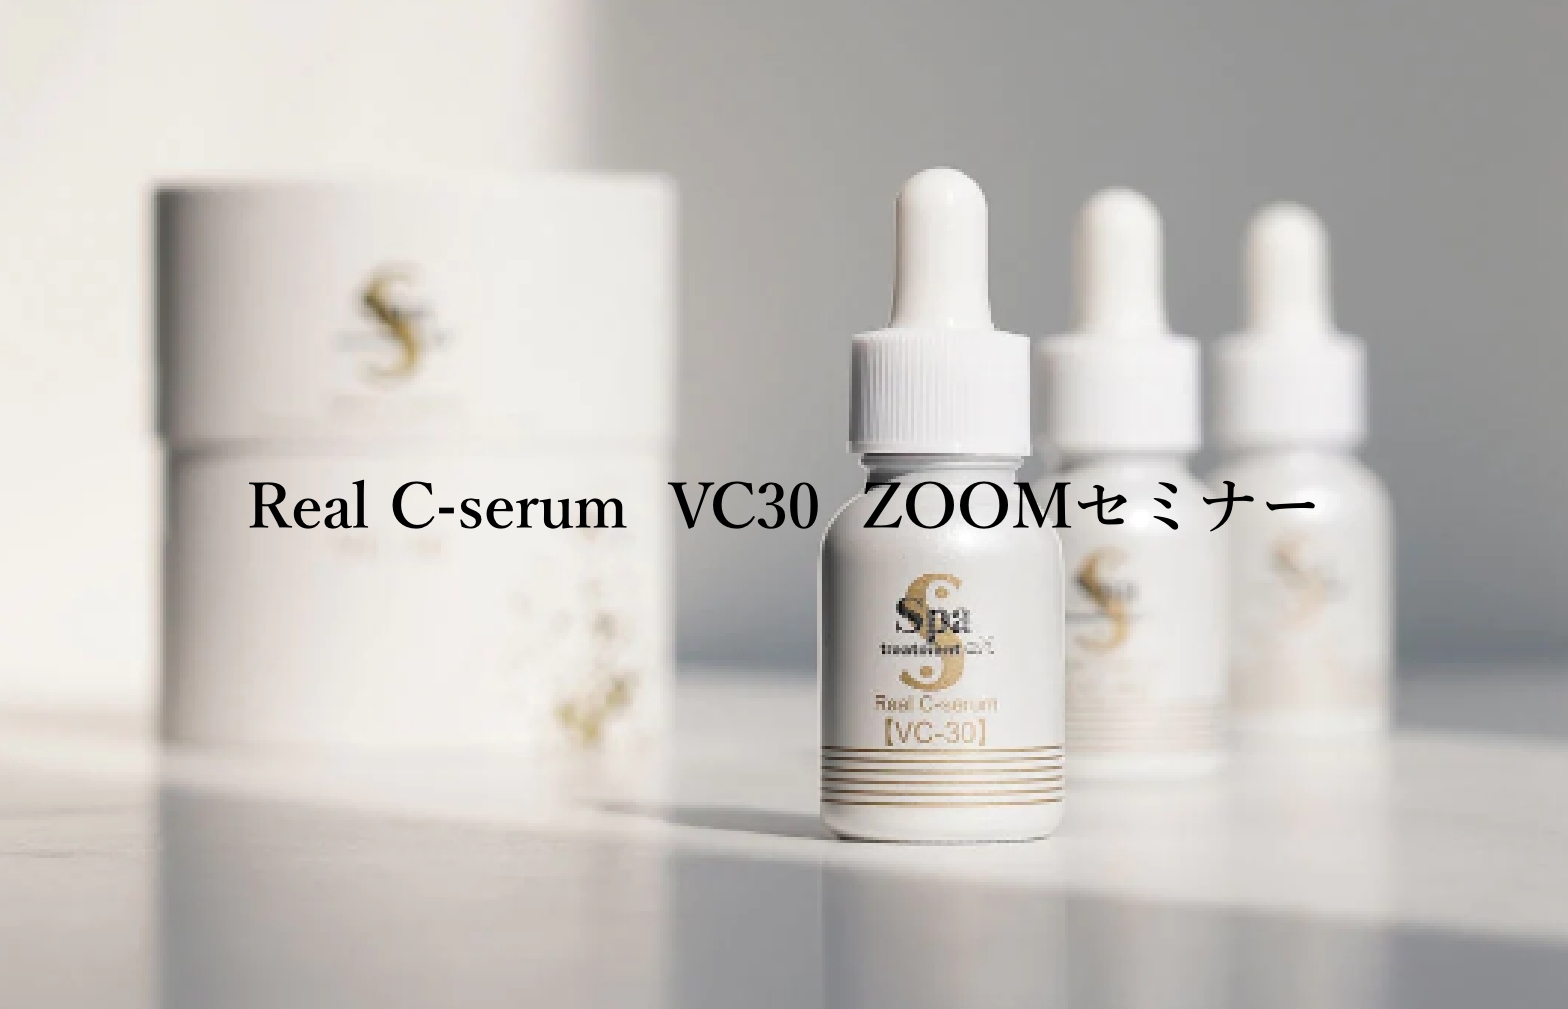 Real C-serum  VC30  ZOOMセミナー